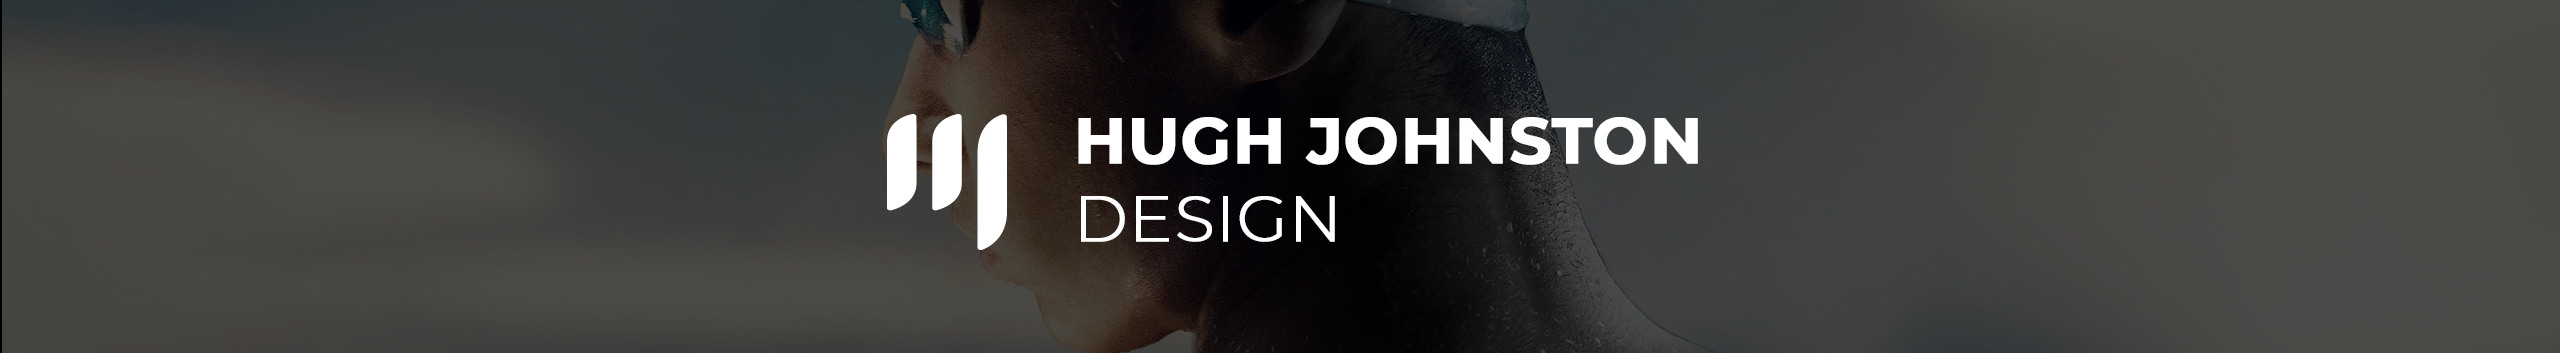 Hugh Johnston's profile banner